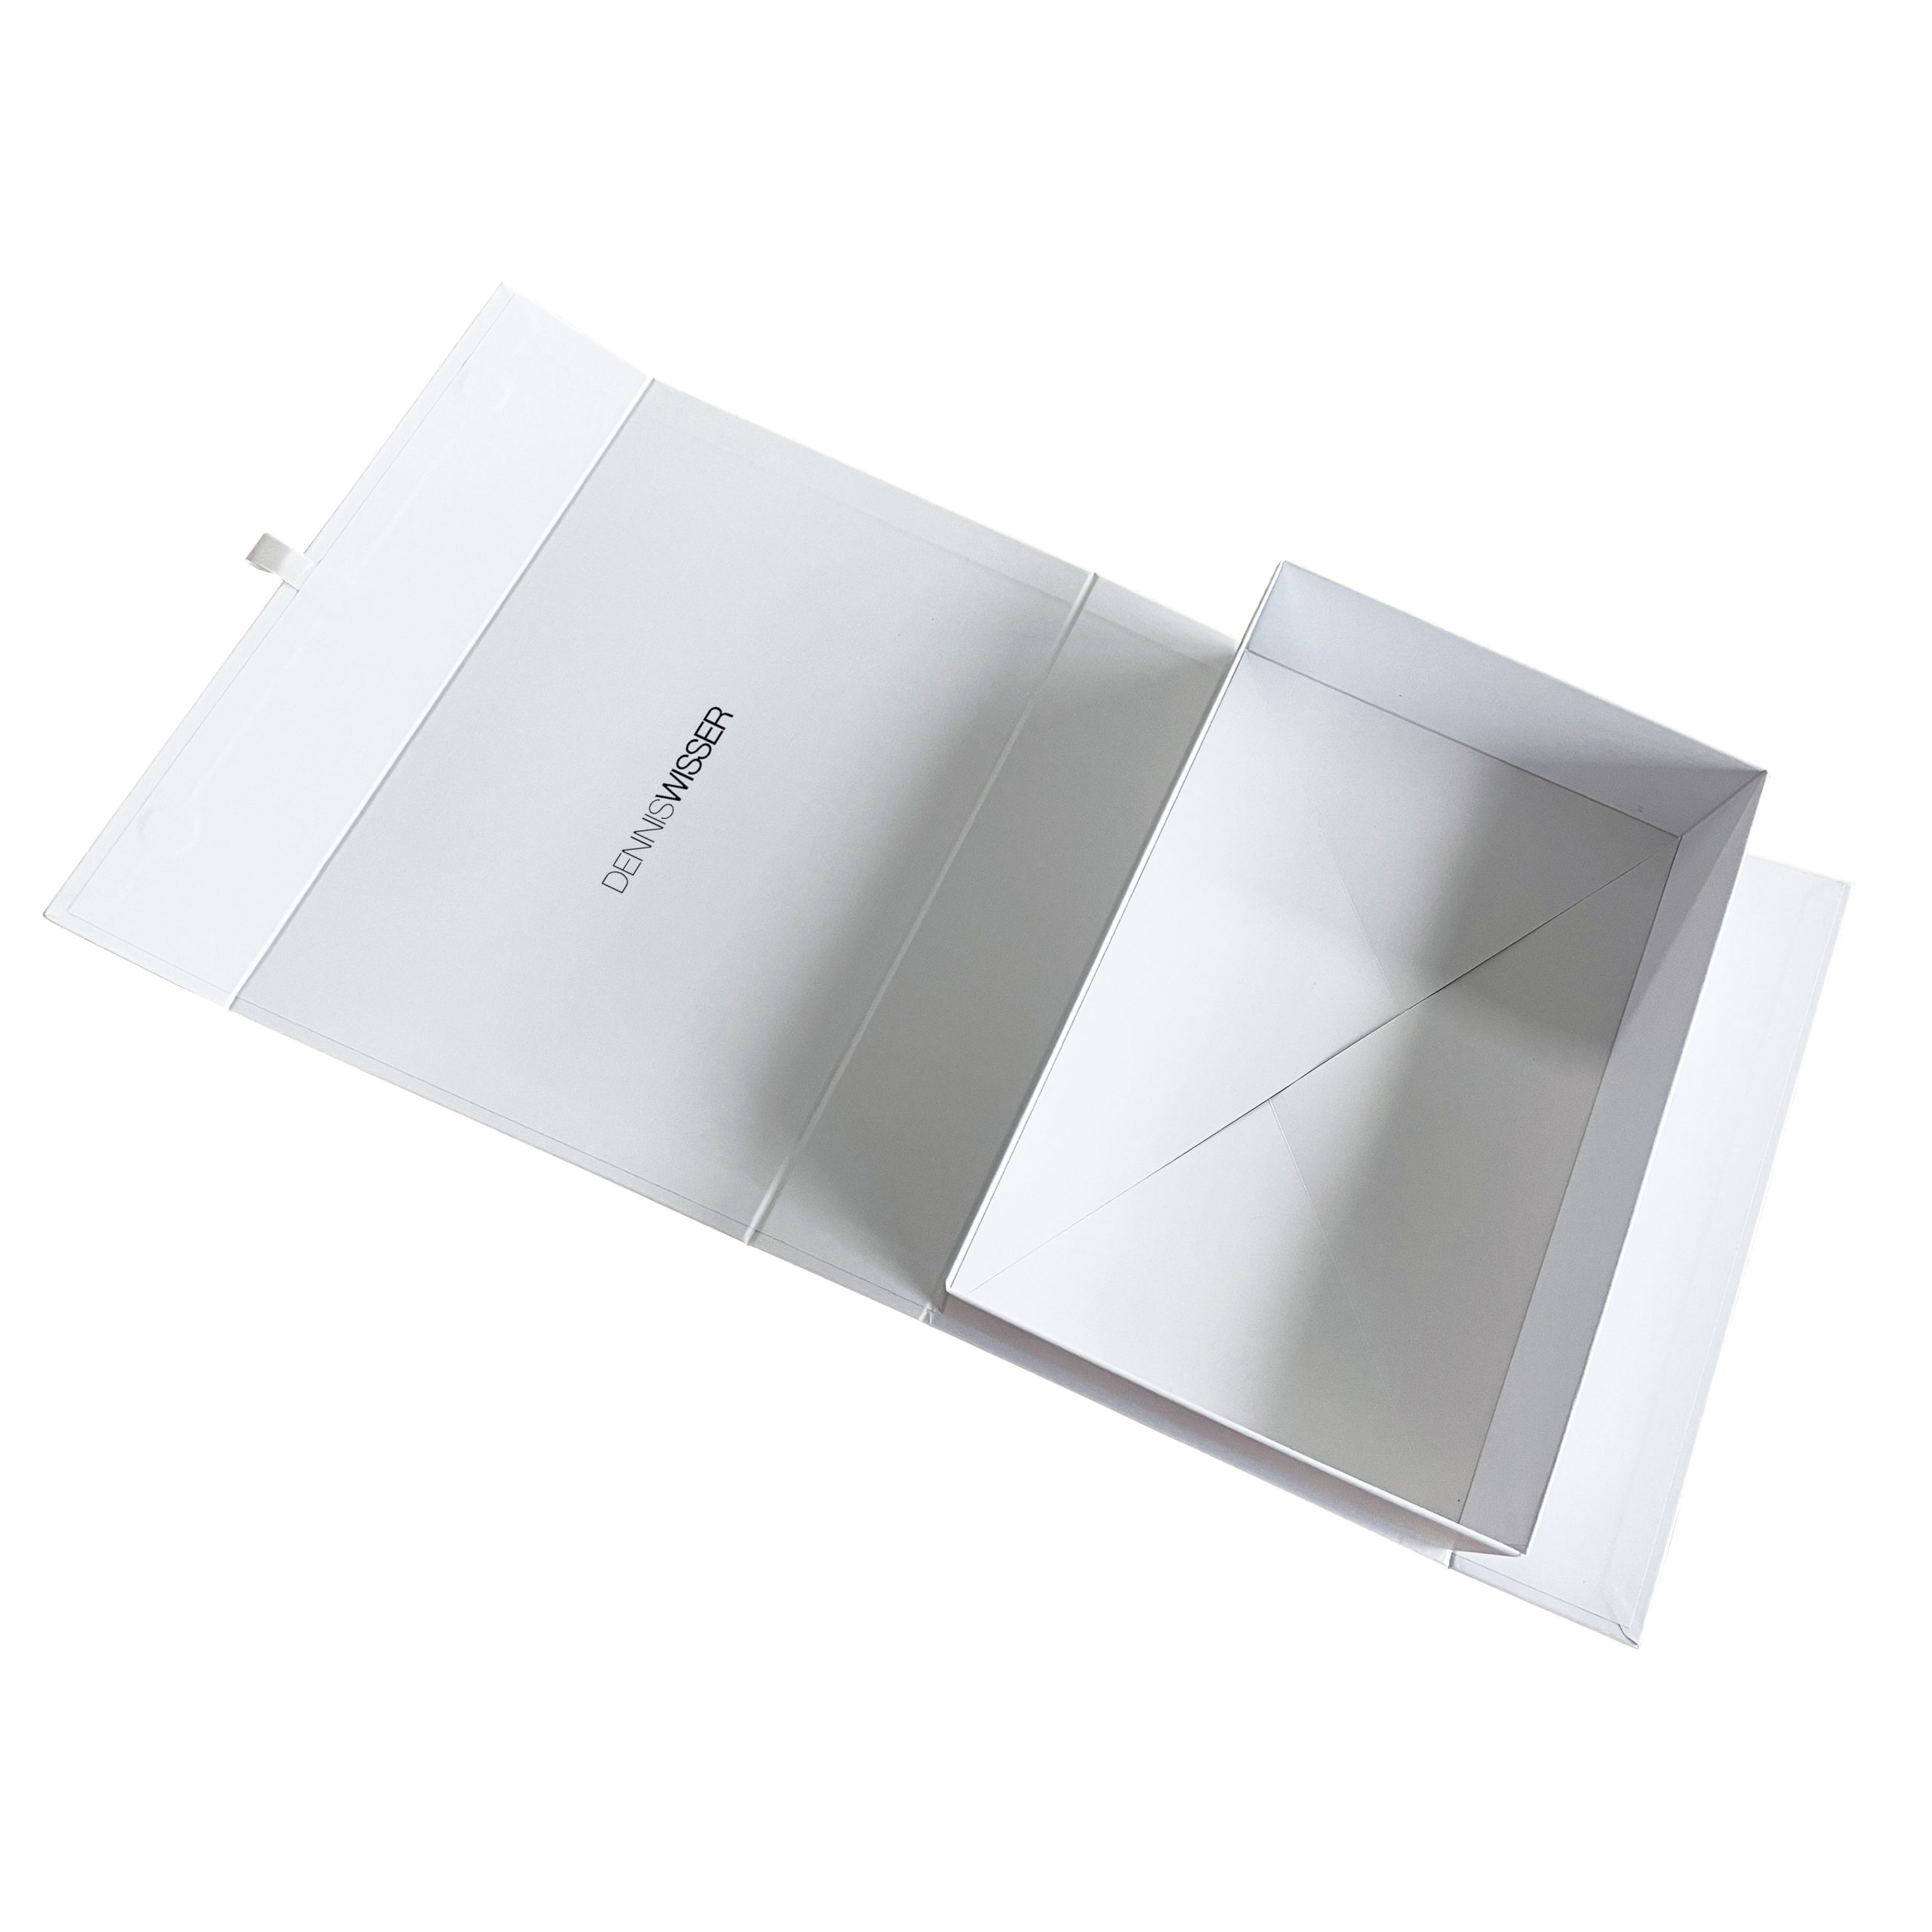 White folding box with black logo print